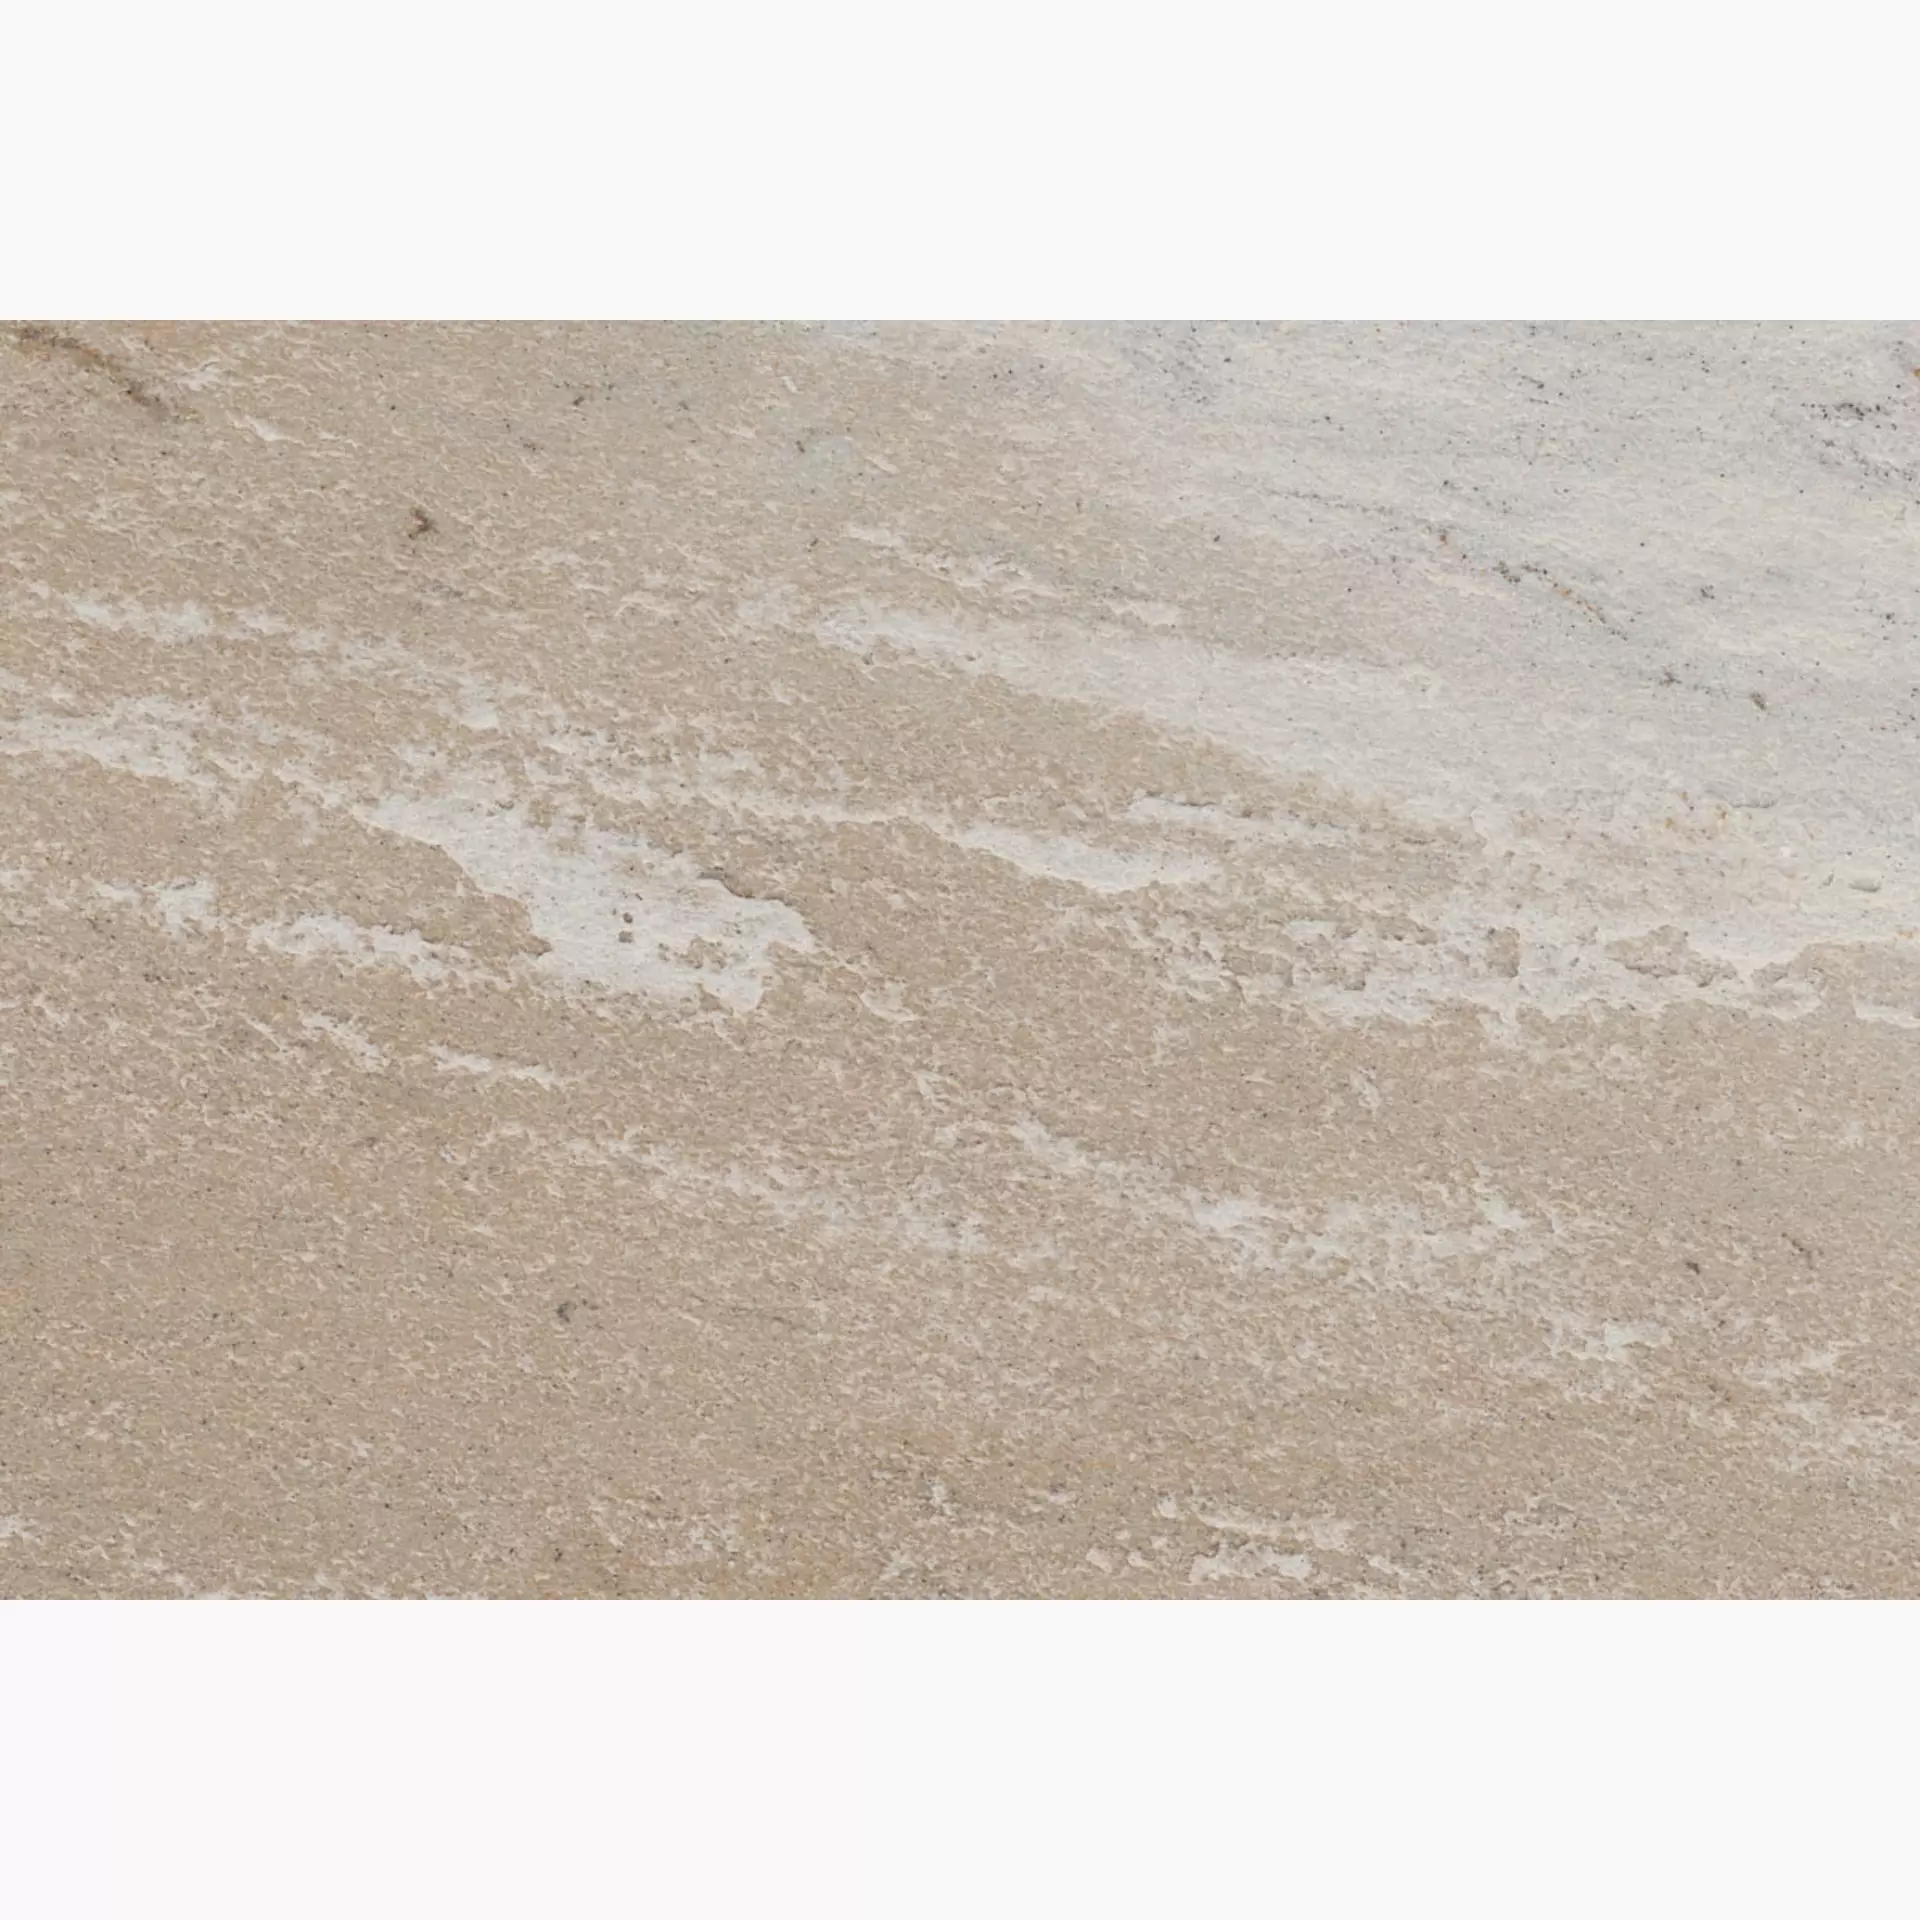 Imola Trail Quarzite Bianco Natural Strutturato Matt Outdoor 176408 20x30cm 18mm